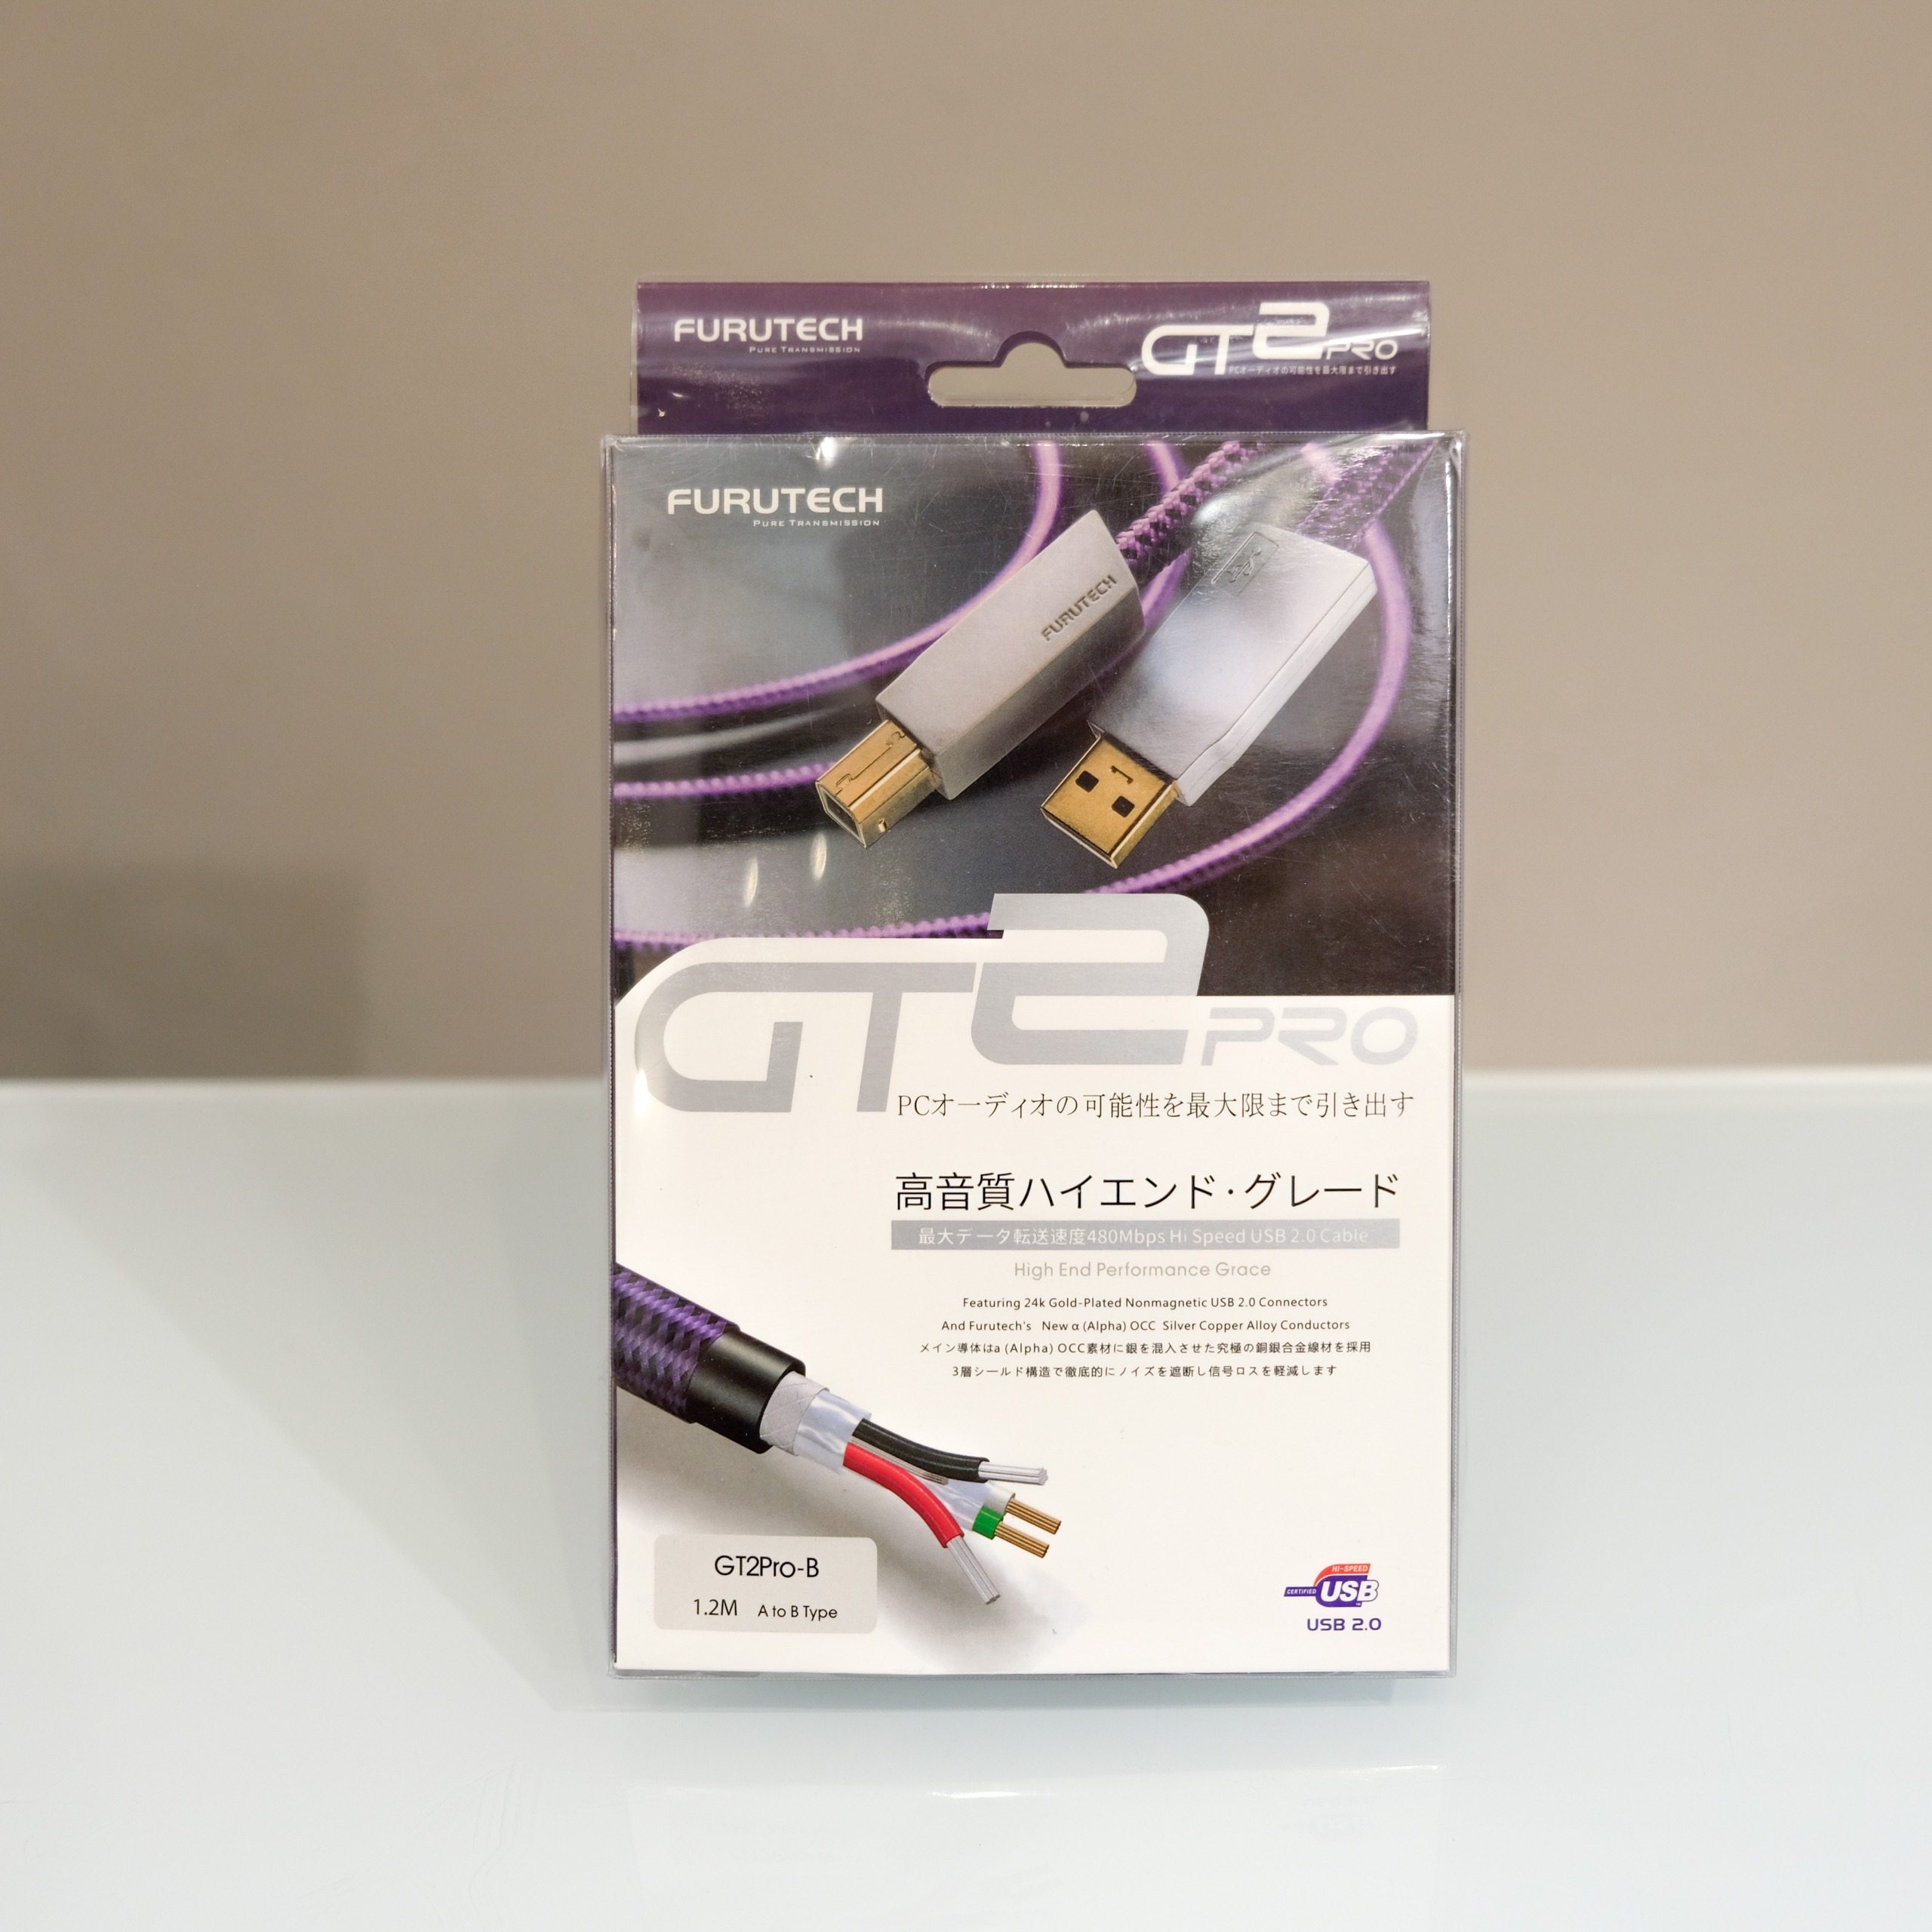 Furutech GT2 PRO-B - USB 2.0 - Audio Construction | Hi-Fi Online 